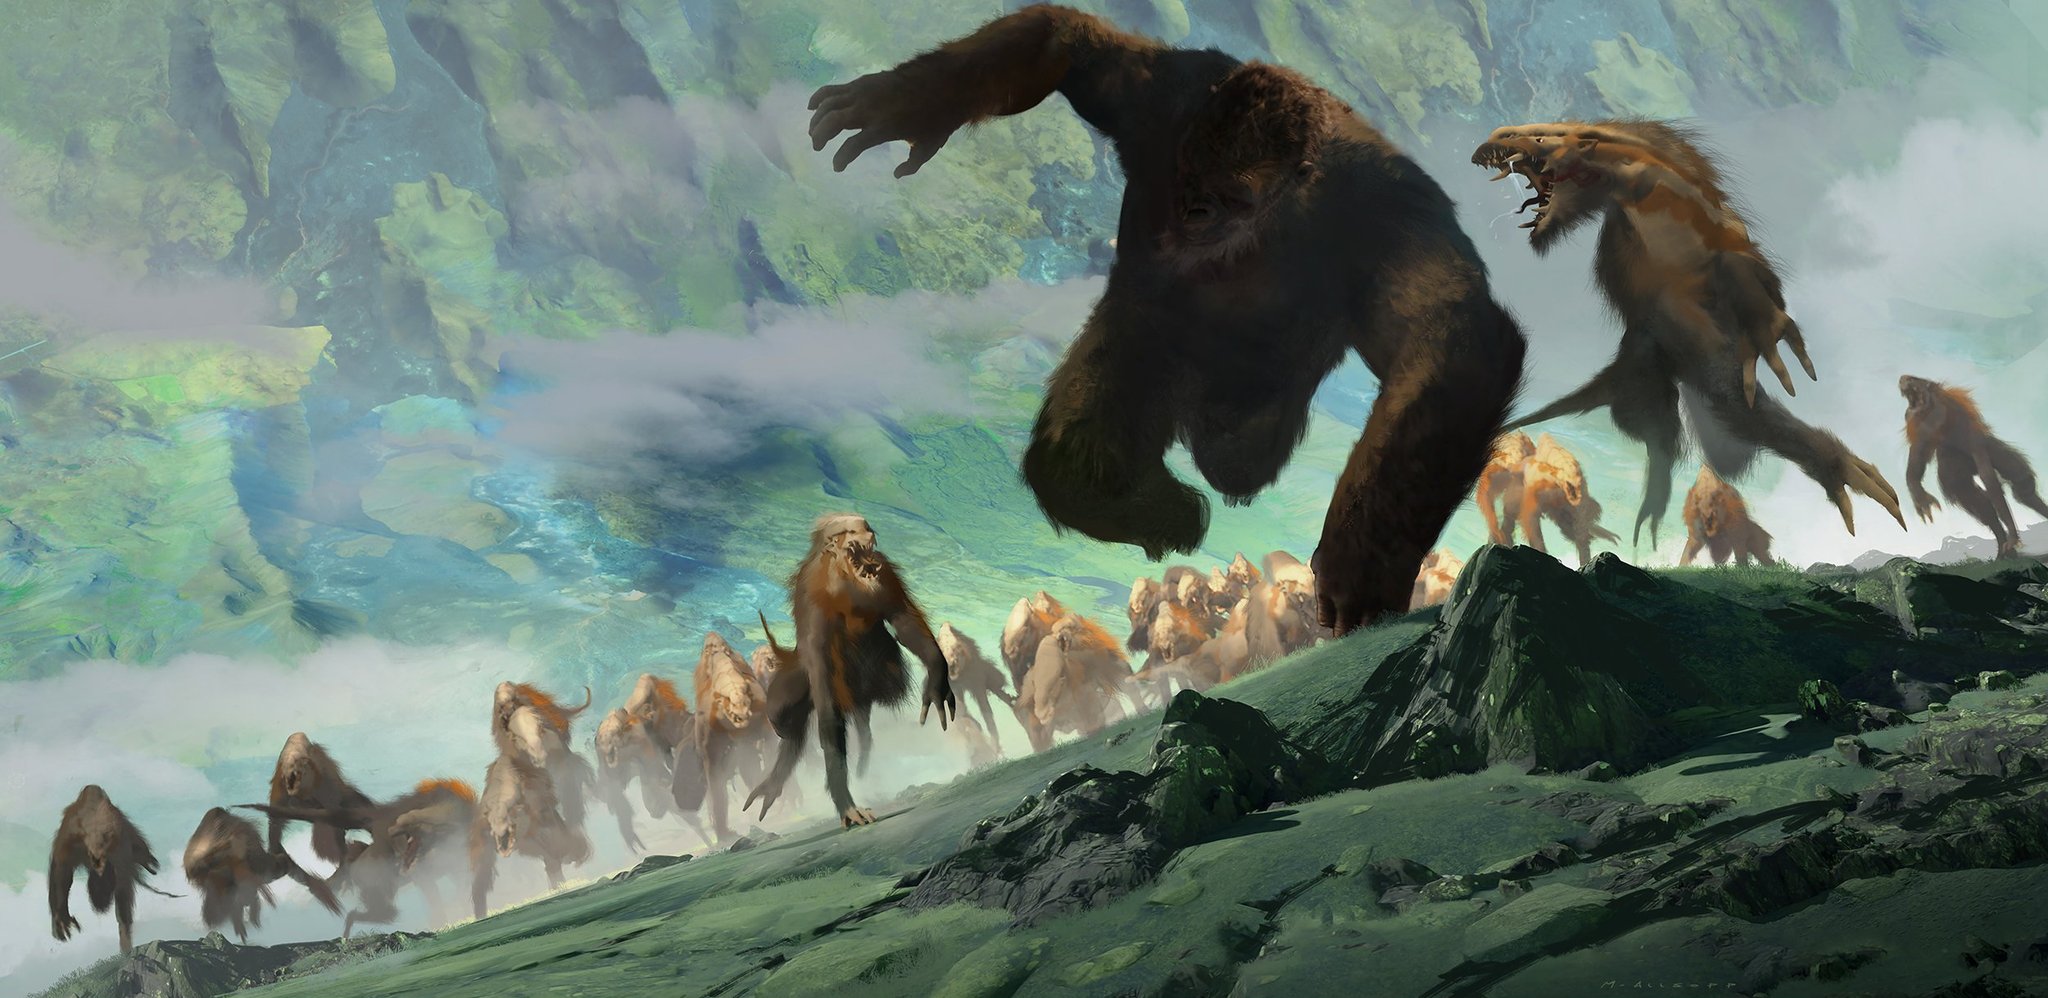 Godzilla x Kong concept art